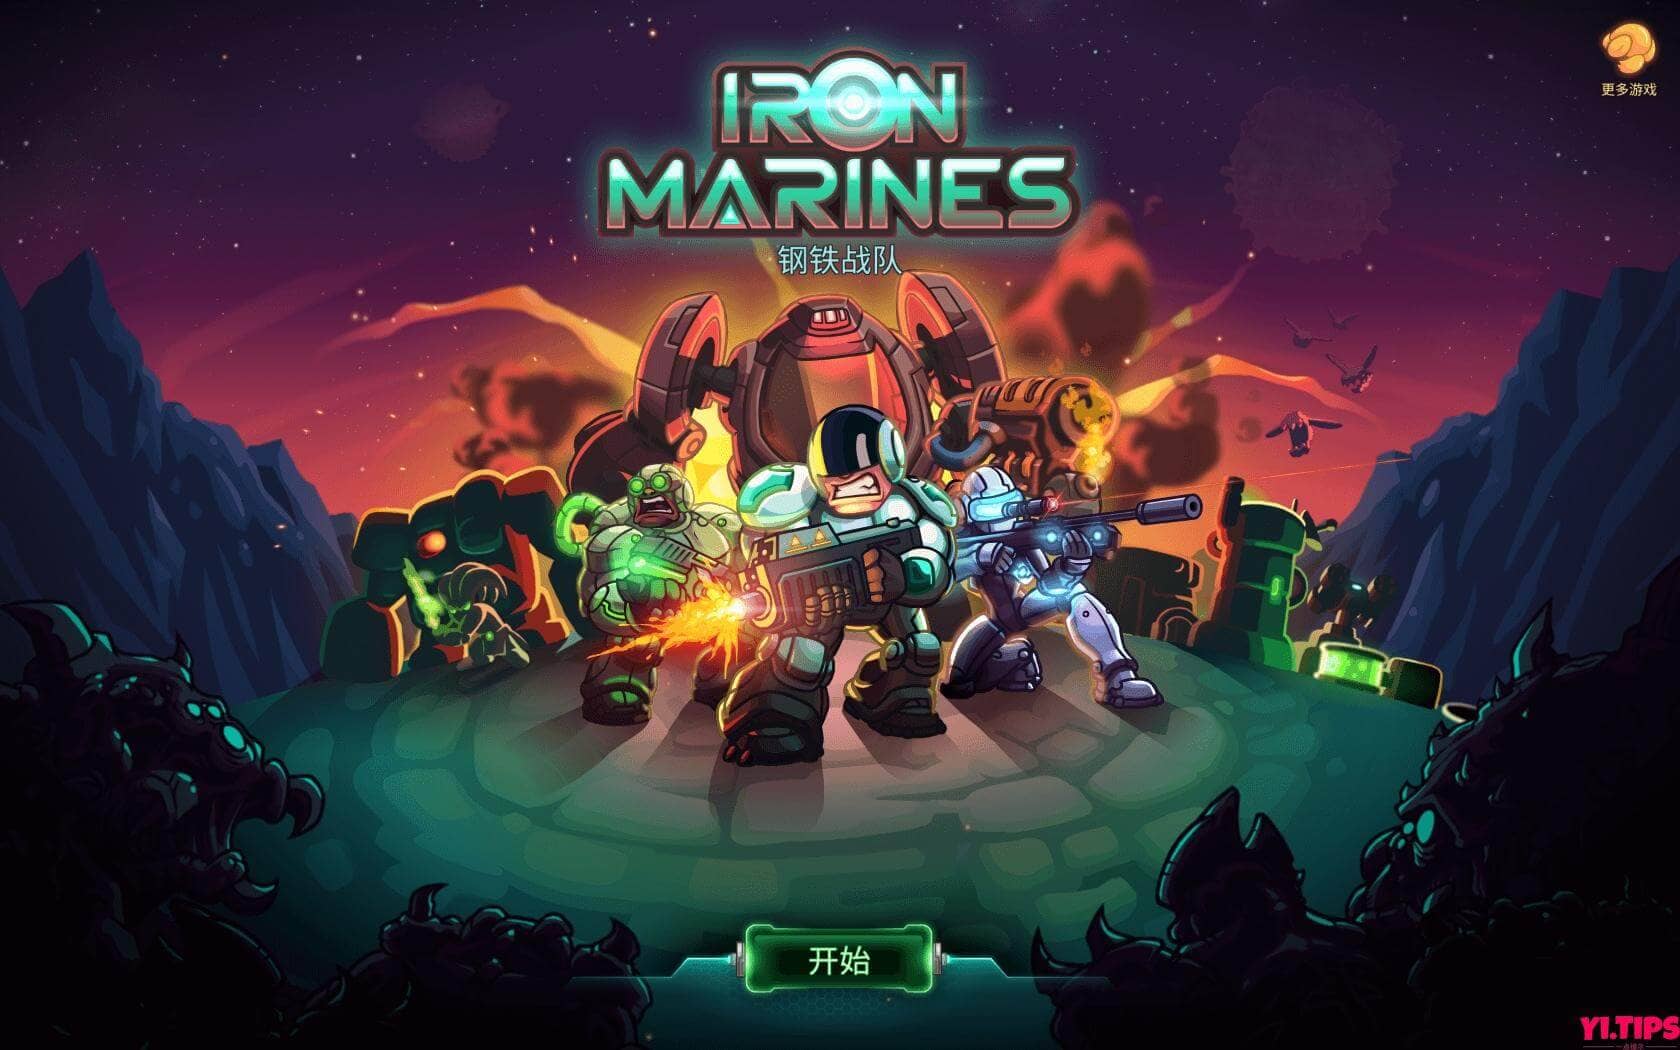 钢铁战队 Iron Marines For Mac V1.0.1 中文原生版-Mac游戏免费下载 - Yi.Tips-Yi.Tips